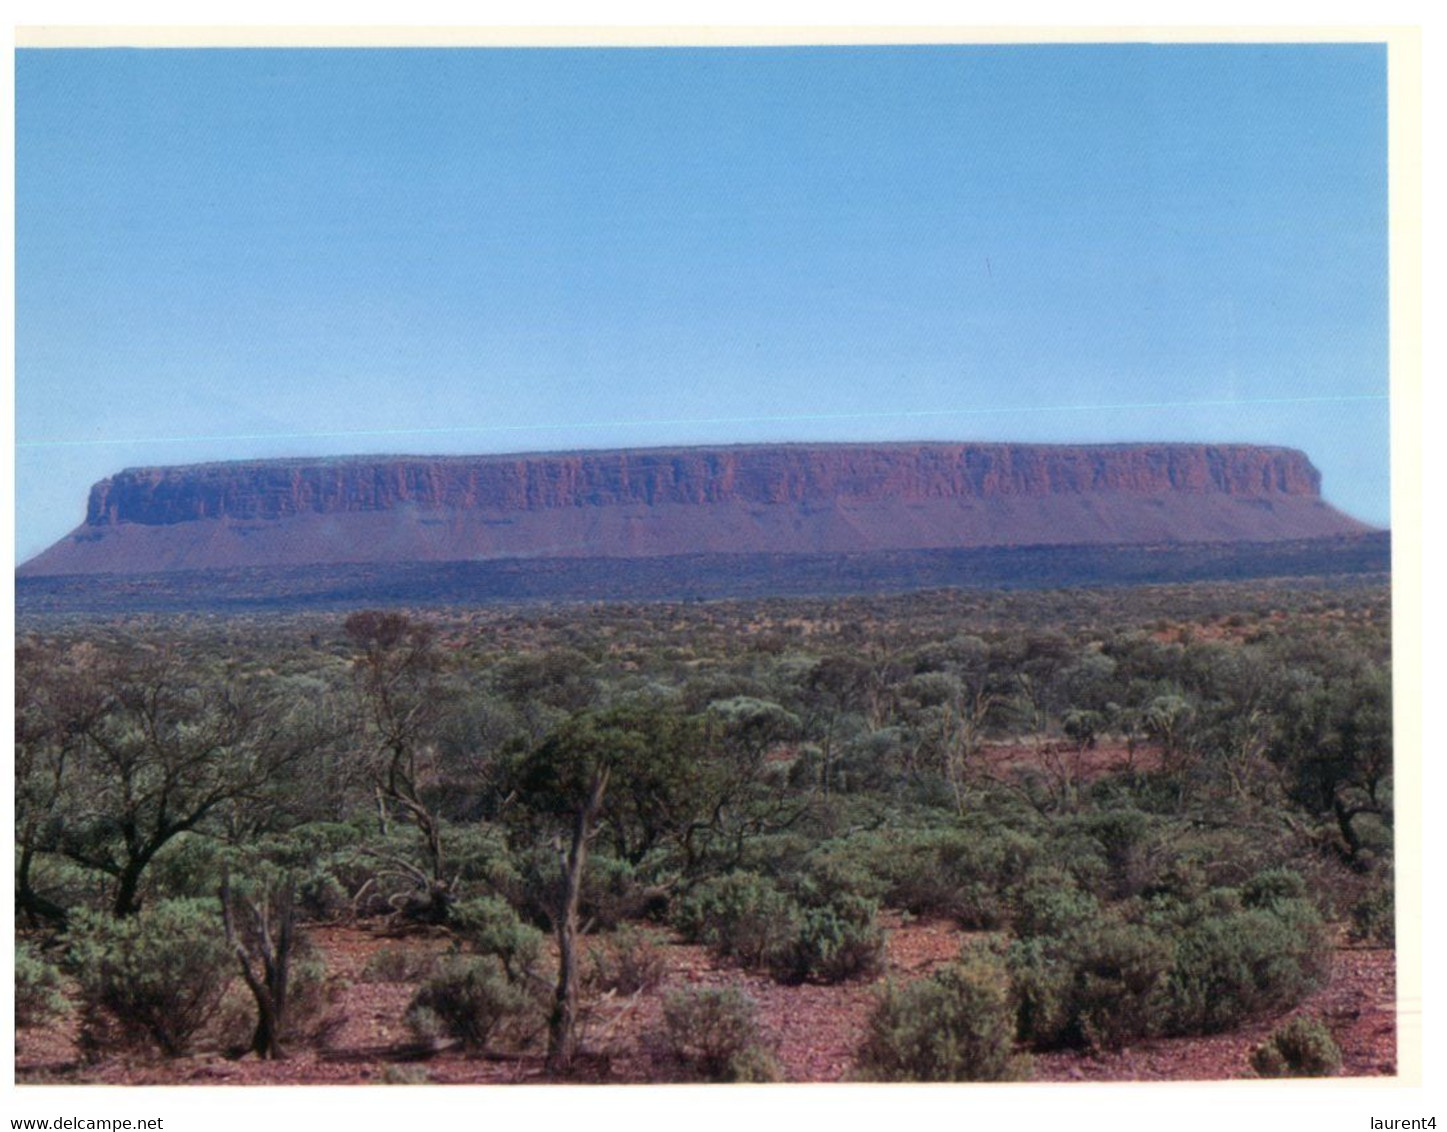 (Y 16) Australia - NT - Central Australia (2 Postcards) - The Red Centre